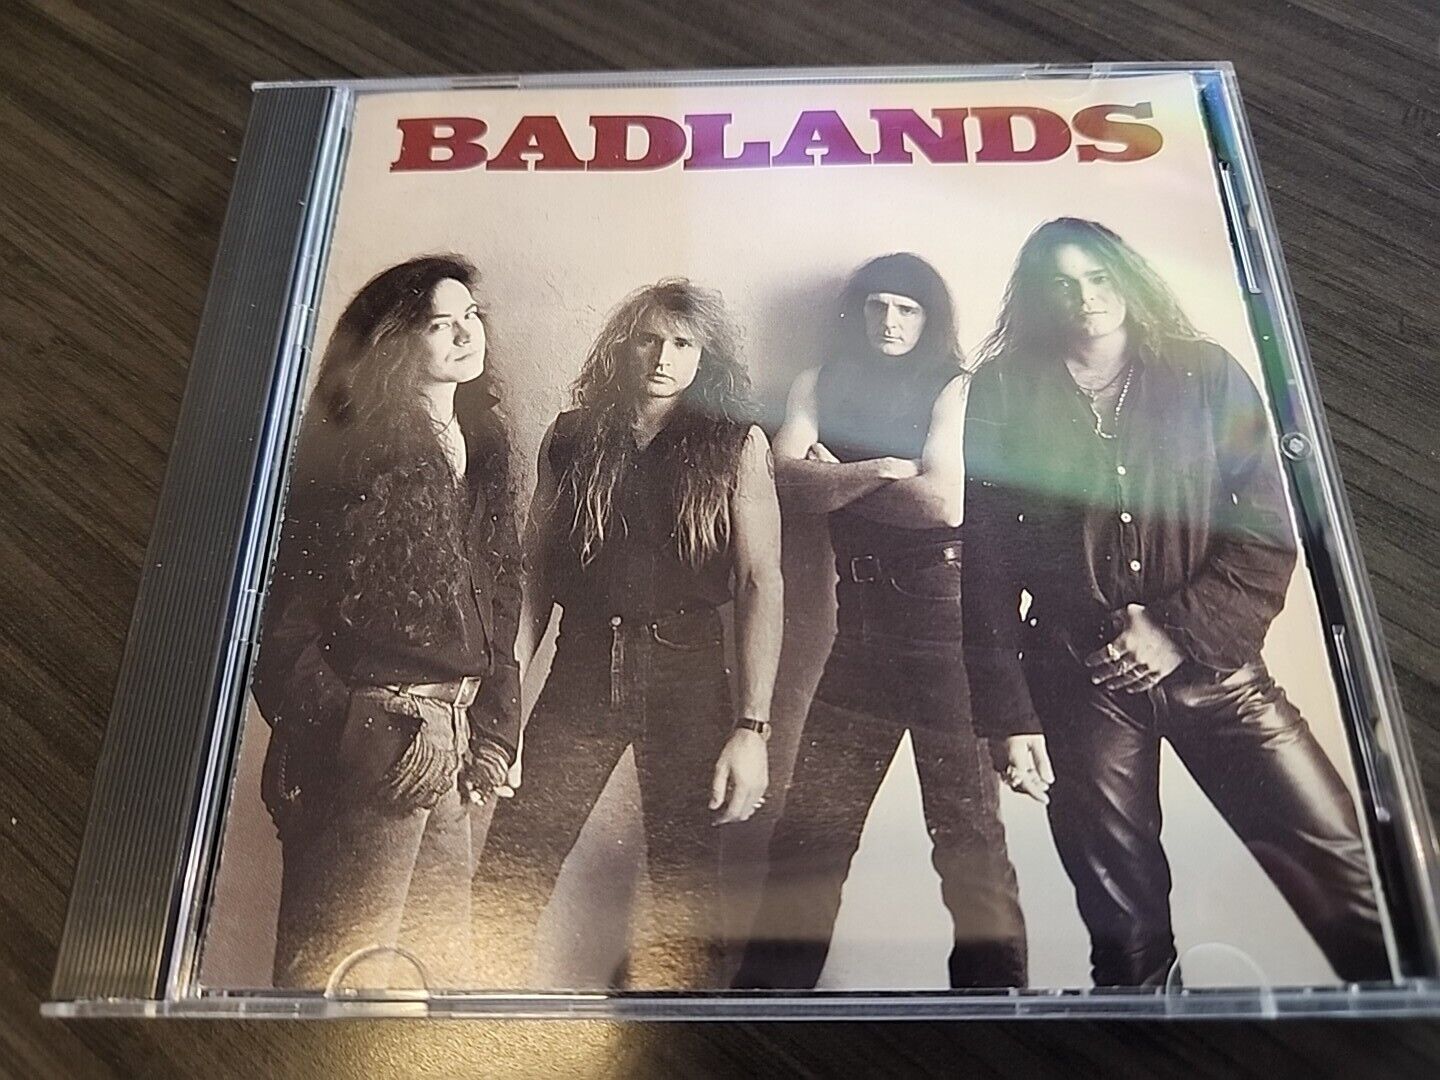 Badlands - Badlands CD ORIGINAL FACTORY, Atlantic Titanium Jake E. Lee